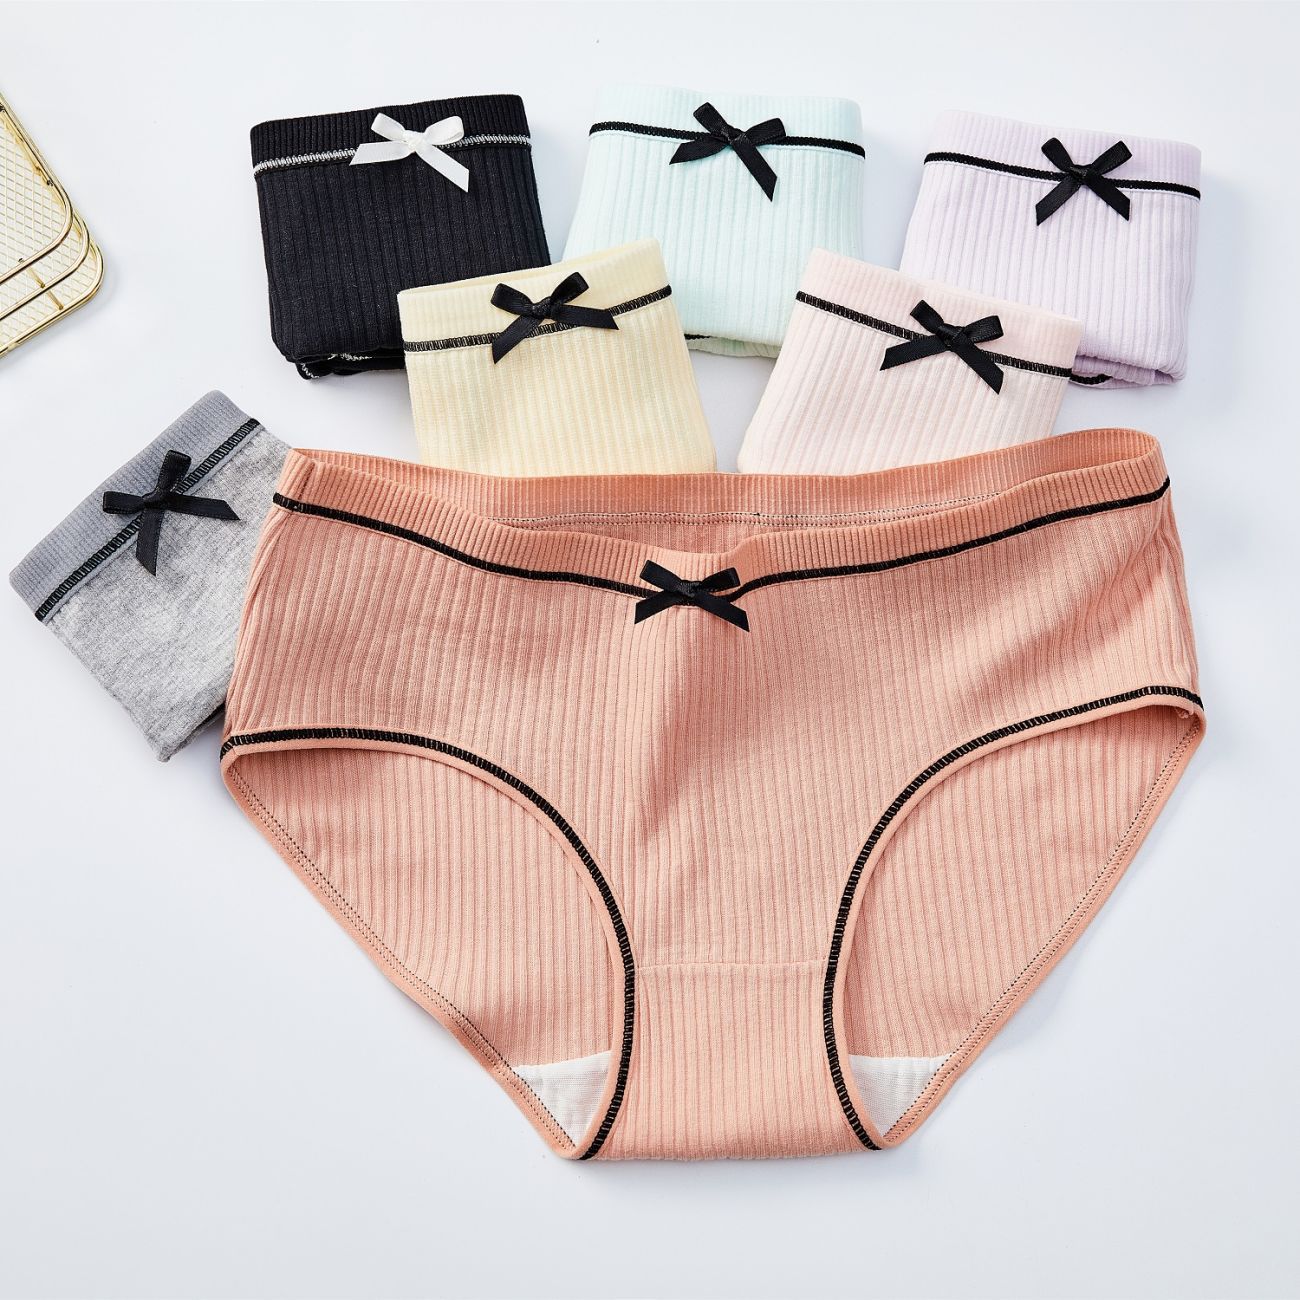 Women's underwear wholesale threaded cot...